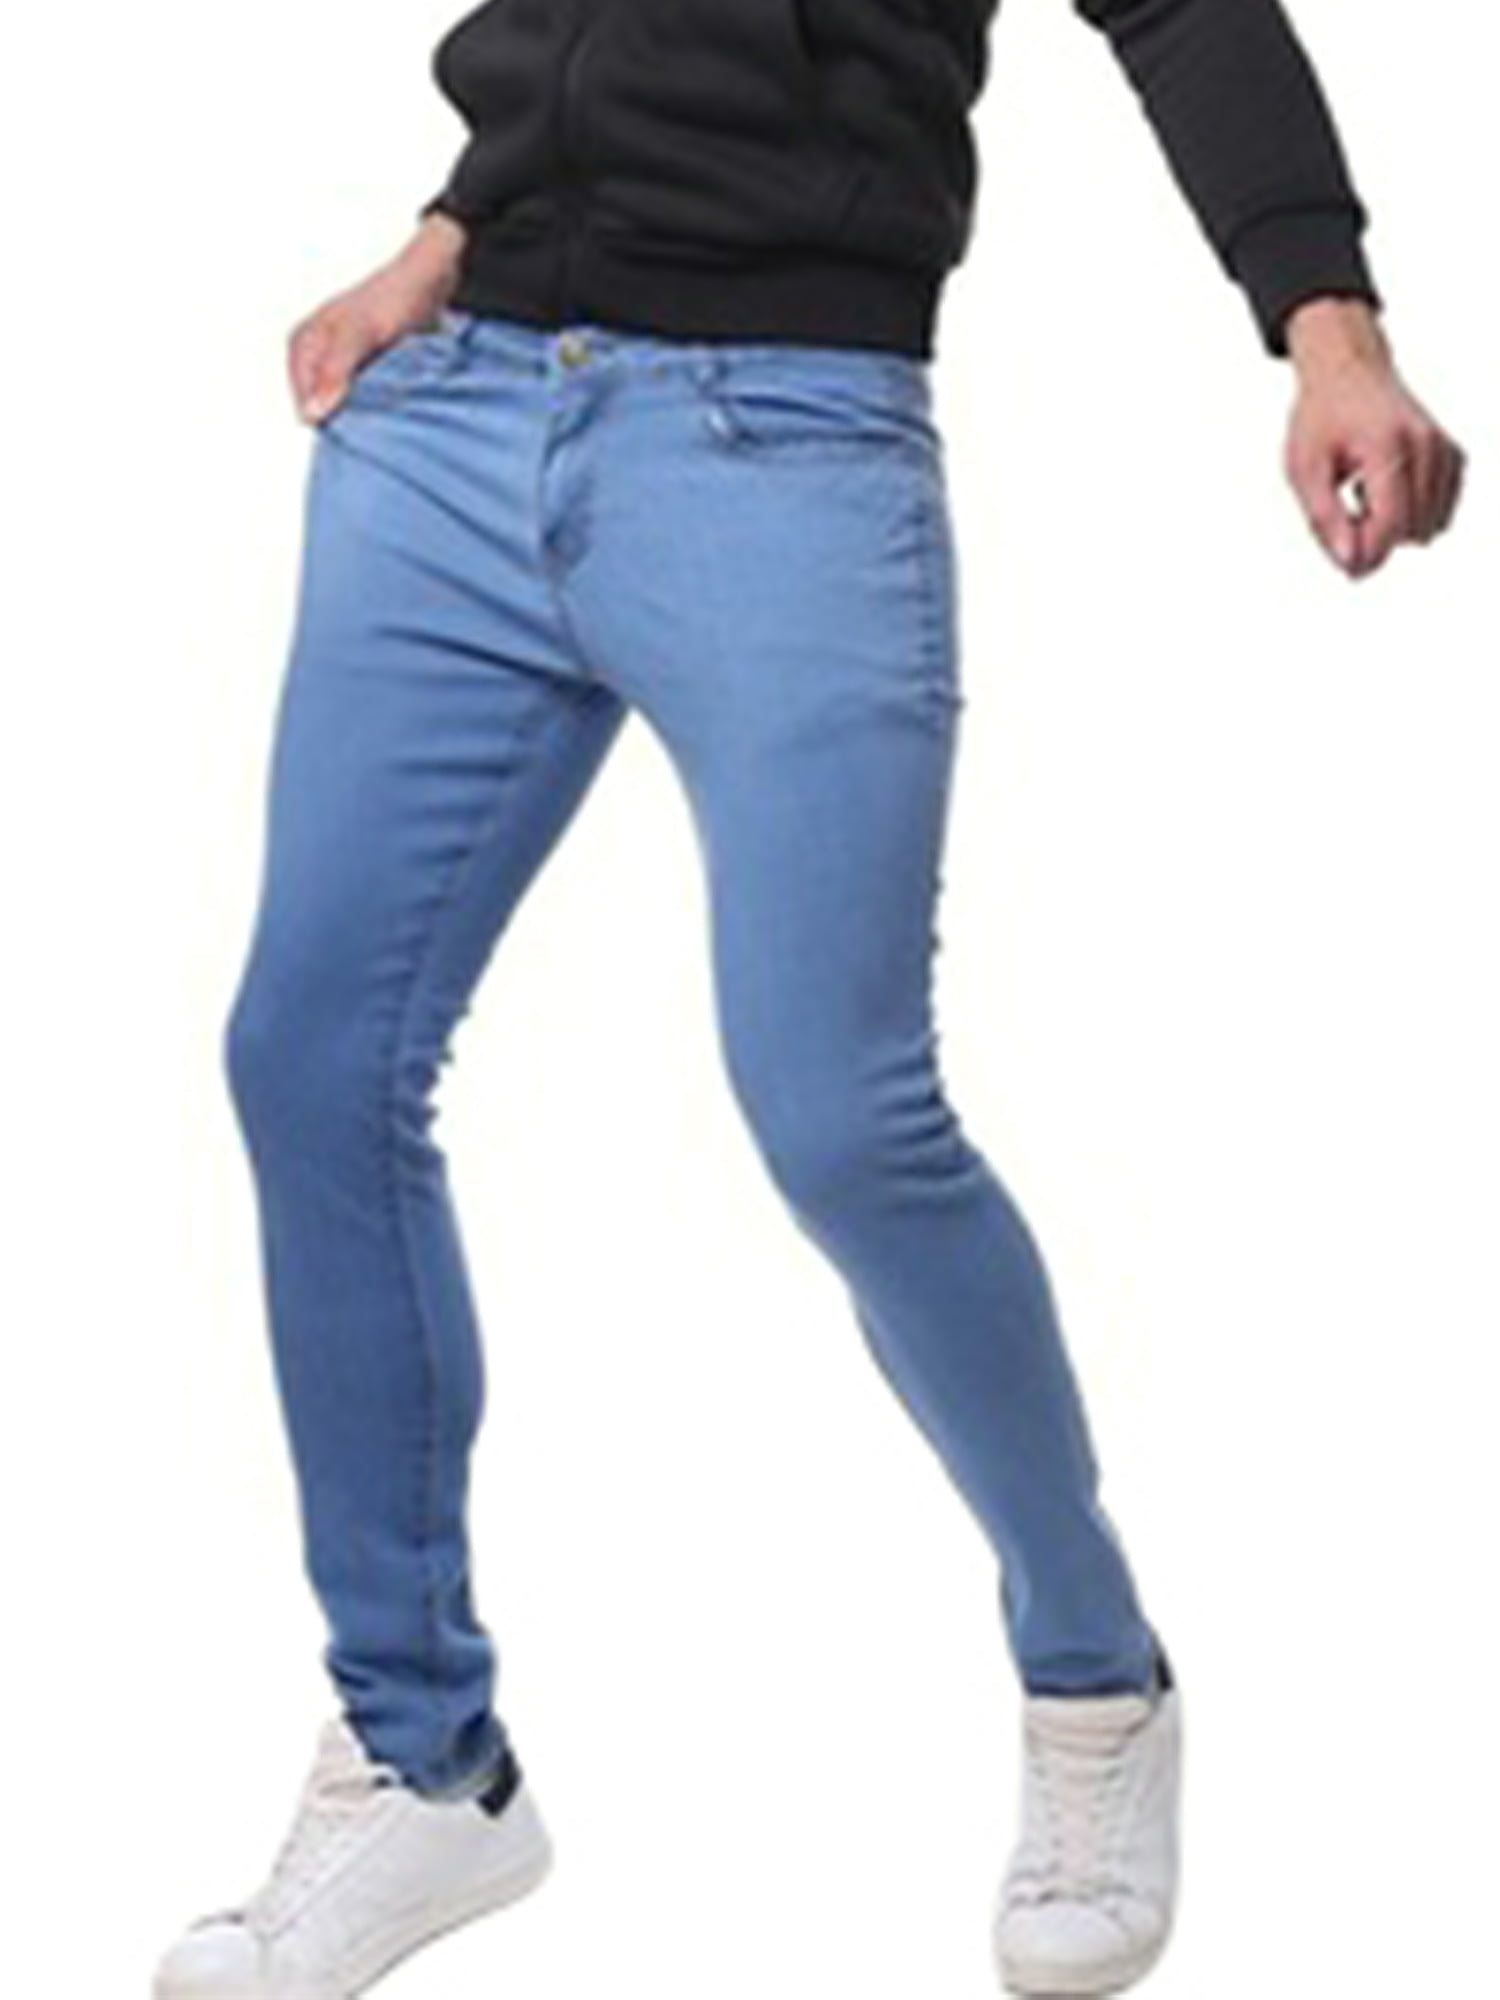 Blue Stretch-fit trousers Farfetch Boys Clothing Pants Stretch Pants 